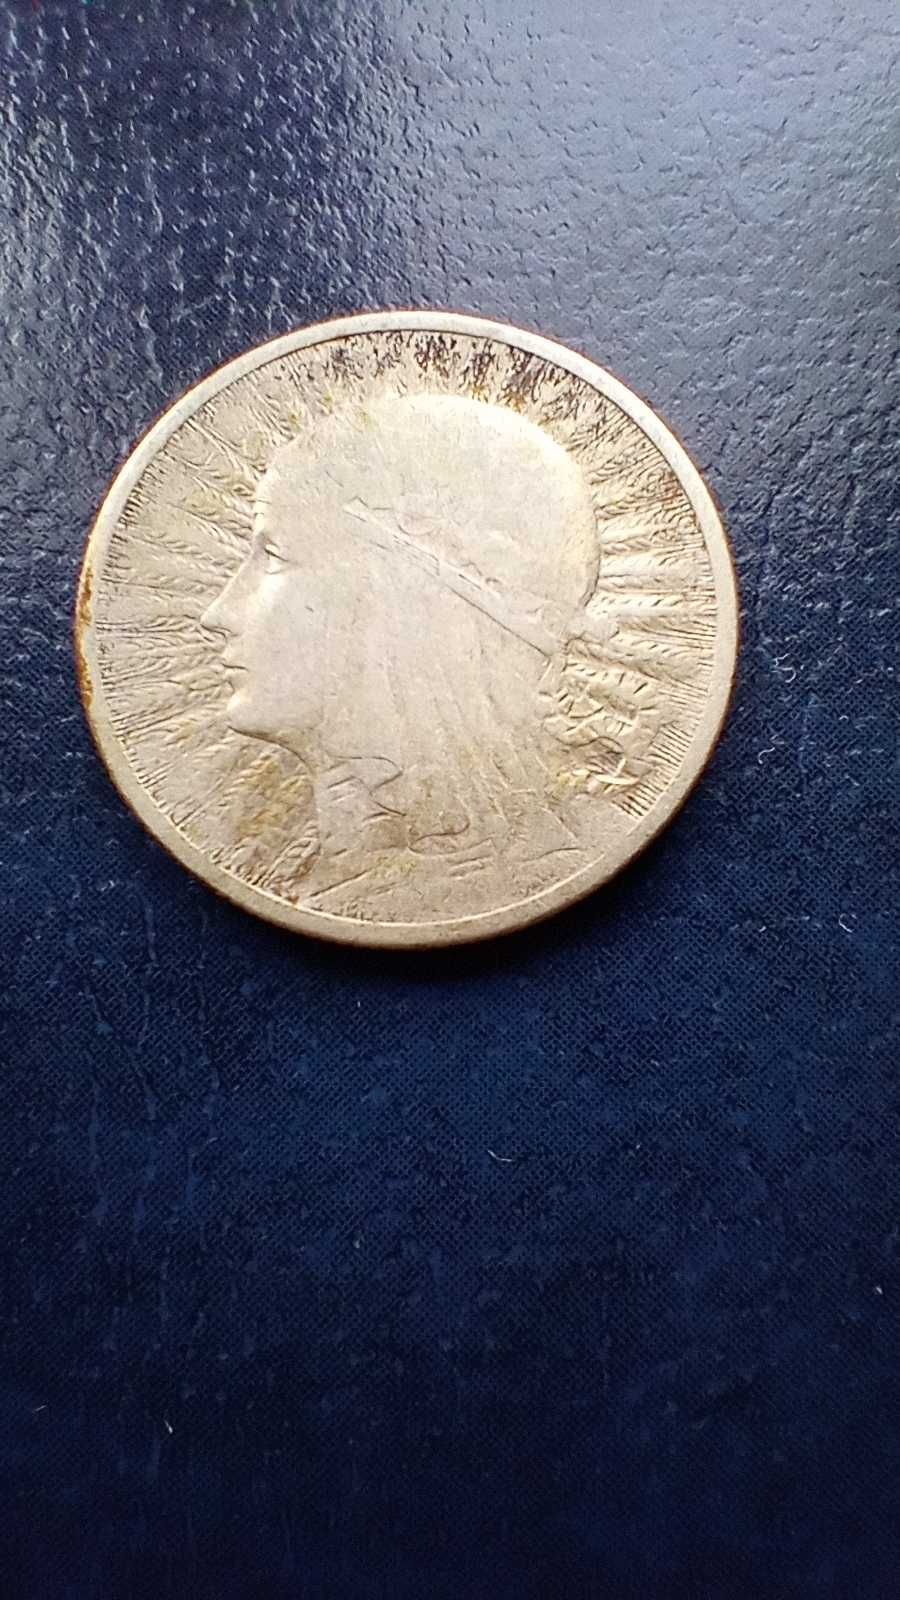 Stare monety 2 złote 1933 Jadwiga 2RP srebro